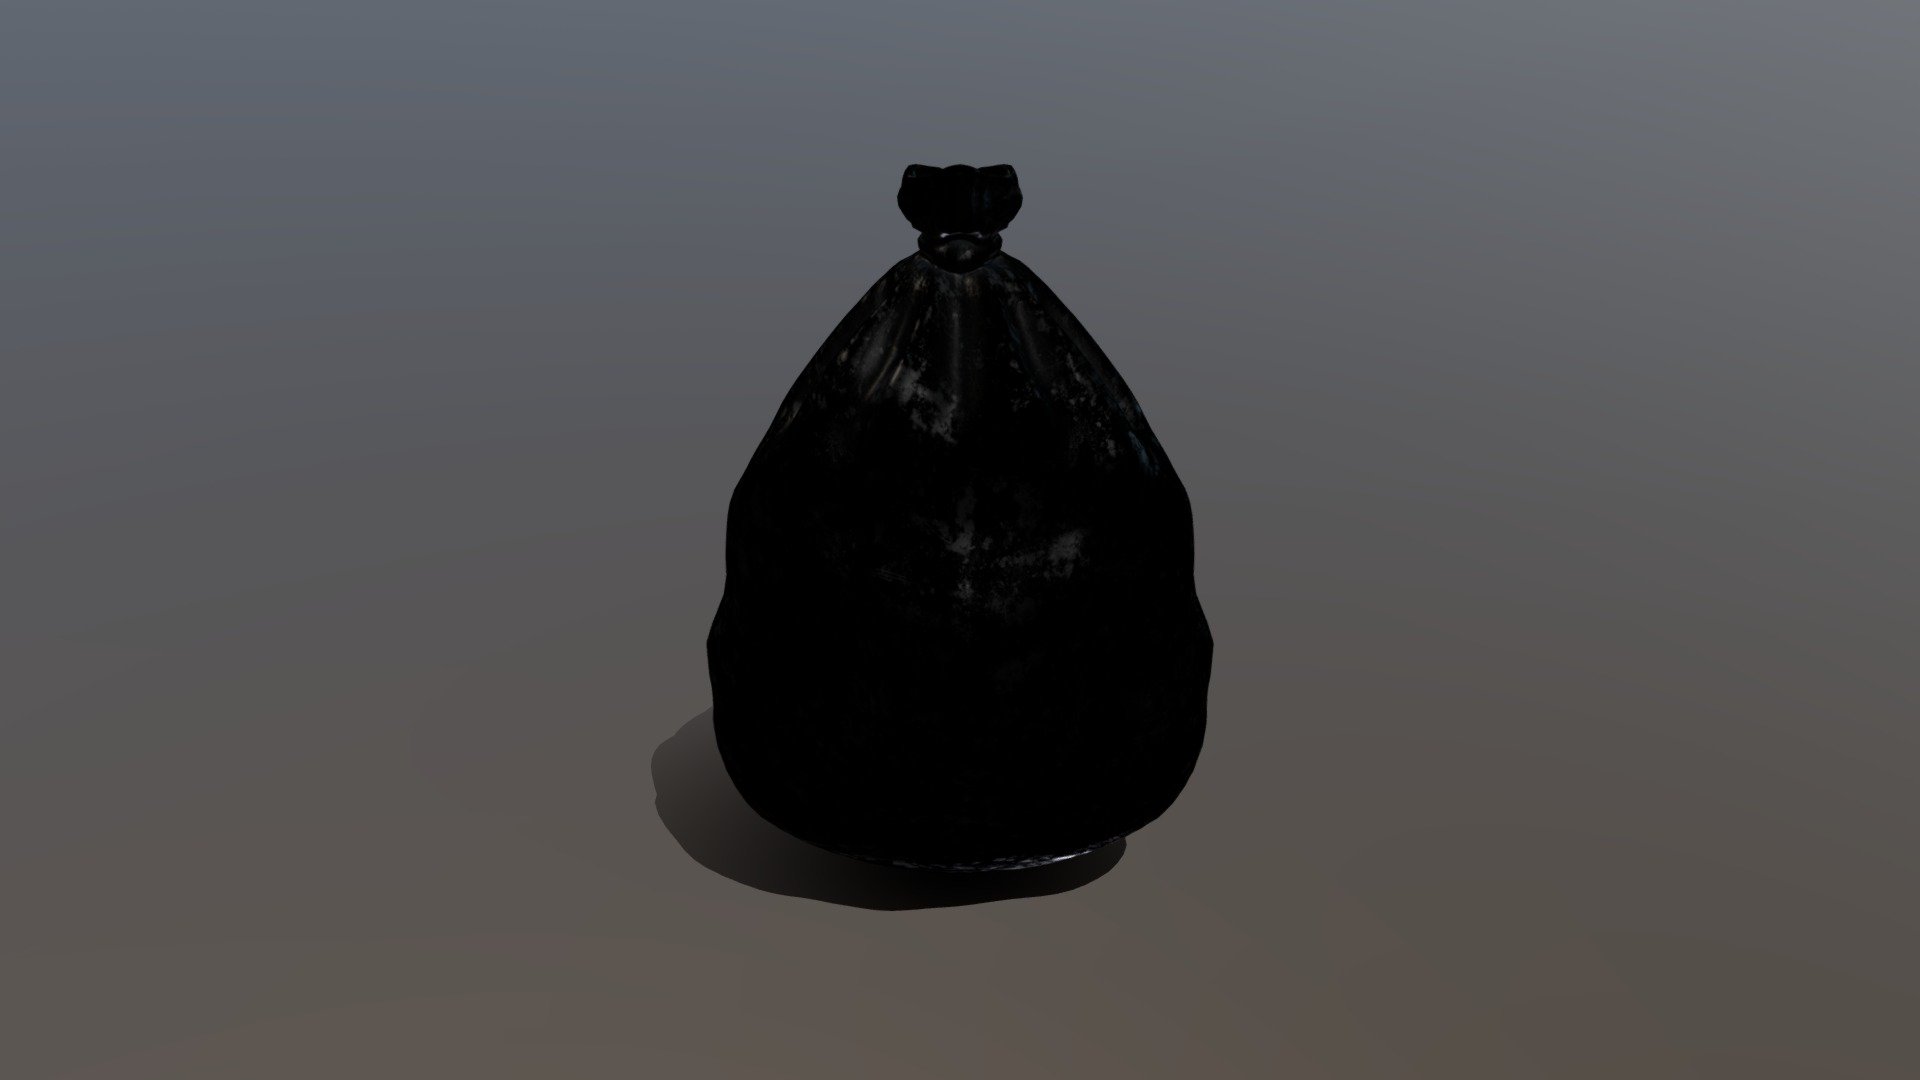 Black Trash Bag